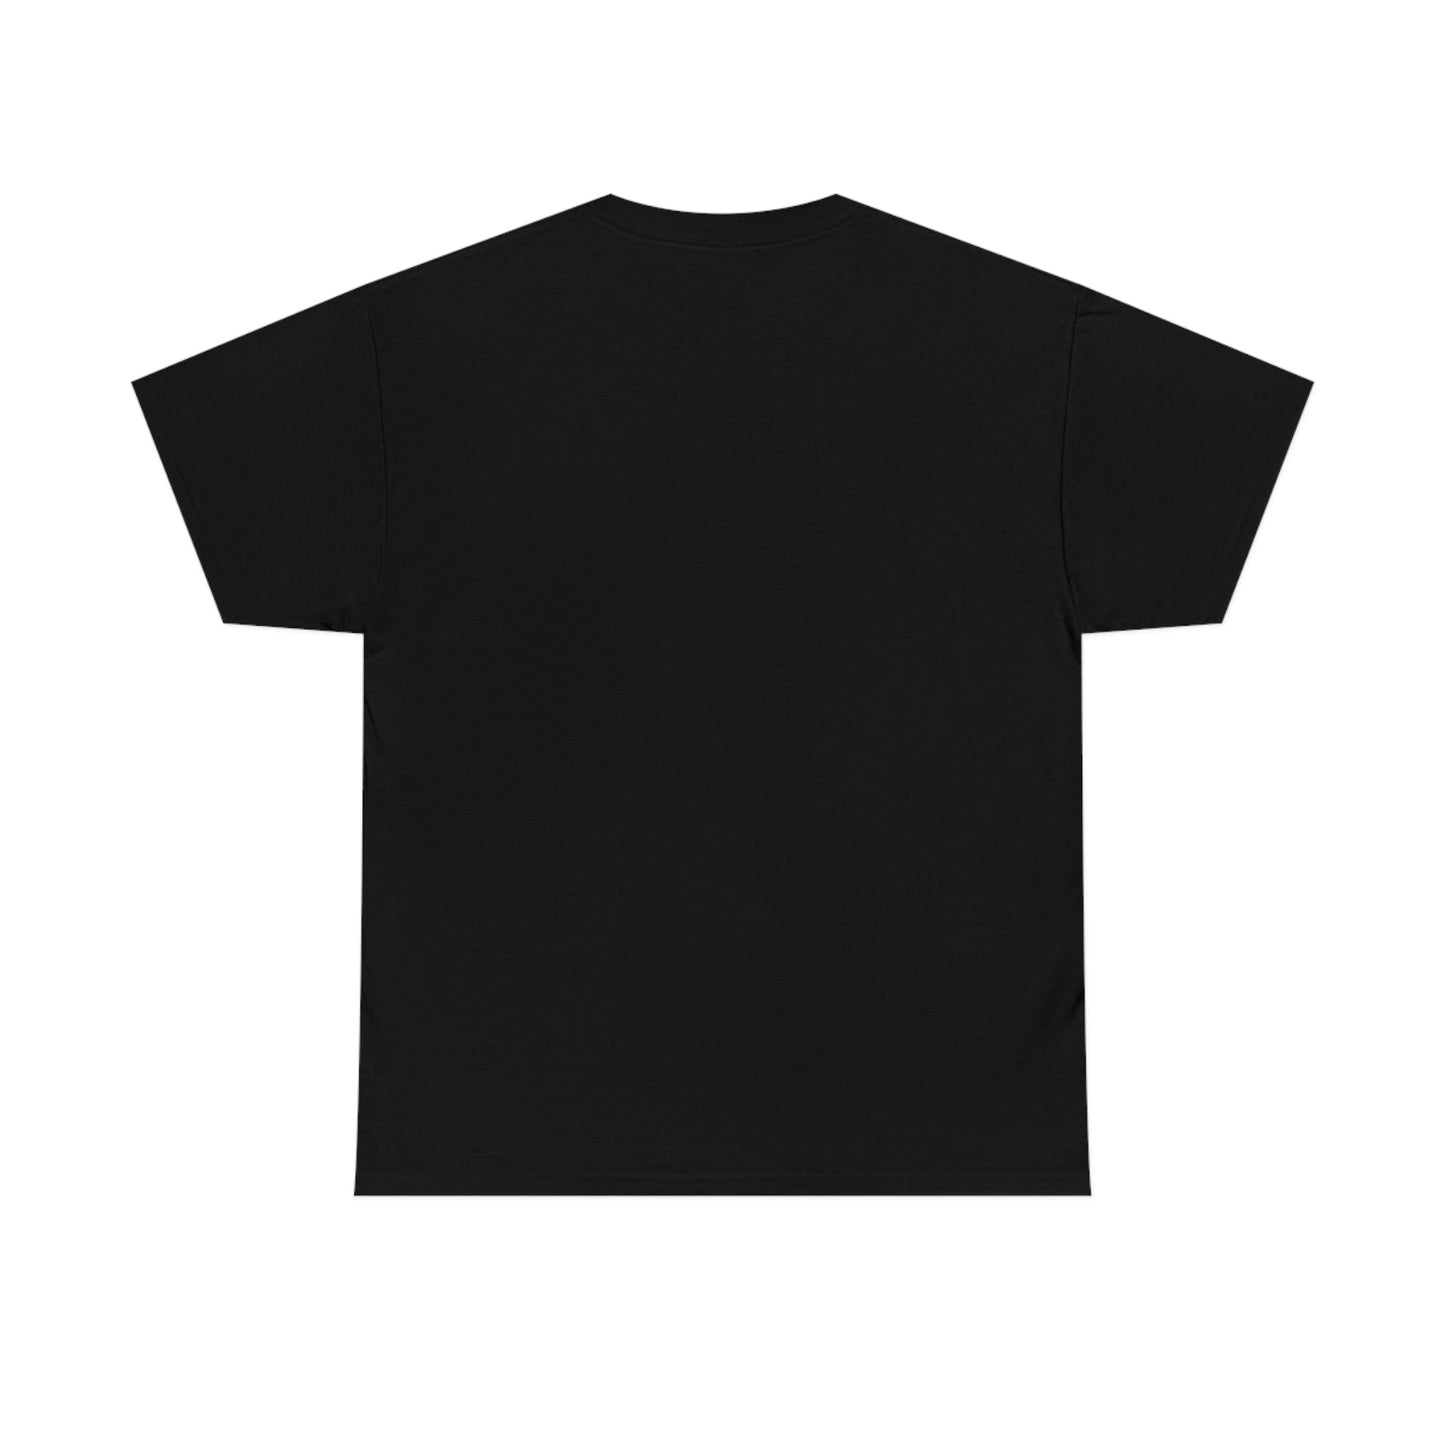 Super Sandler Bros Adam Sandler T-Shirt - RetroTeeShop